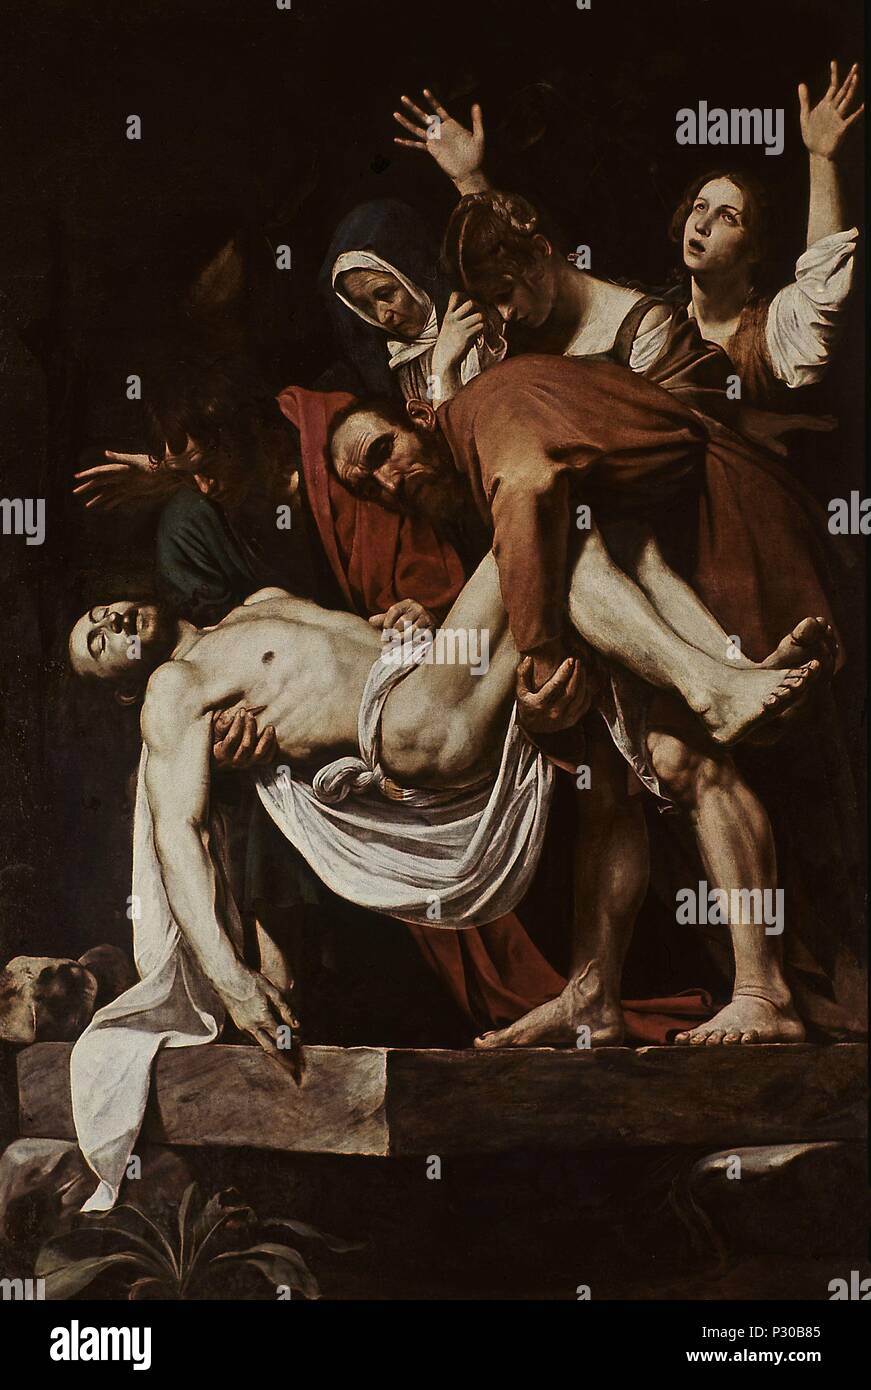 "Tumulazione di Cristo", ca. 1602/04, olio su tela, 300 x 203 cm. Autore: Caravaggio (c. 1570-1610). Posizione: MUSEOS VATICANOS-pinacoteca, VATICANO. Noto anche come: EL SANTO ENTIERRO O EL DESCENDIMIENTO DE LA CRUZ. Foto Stock